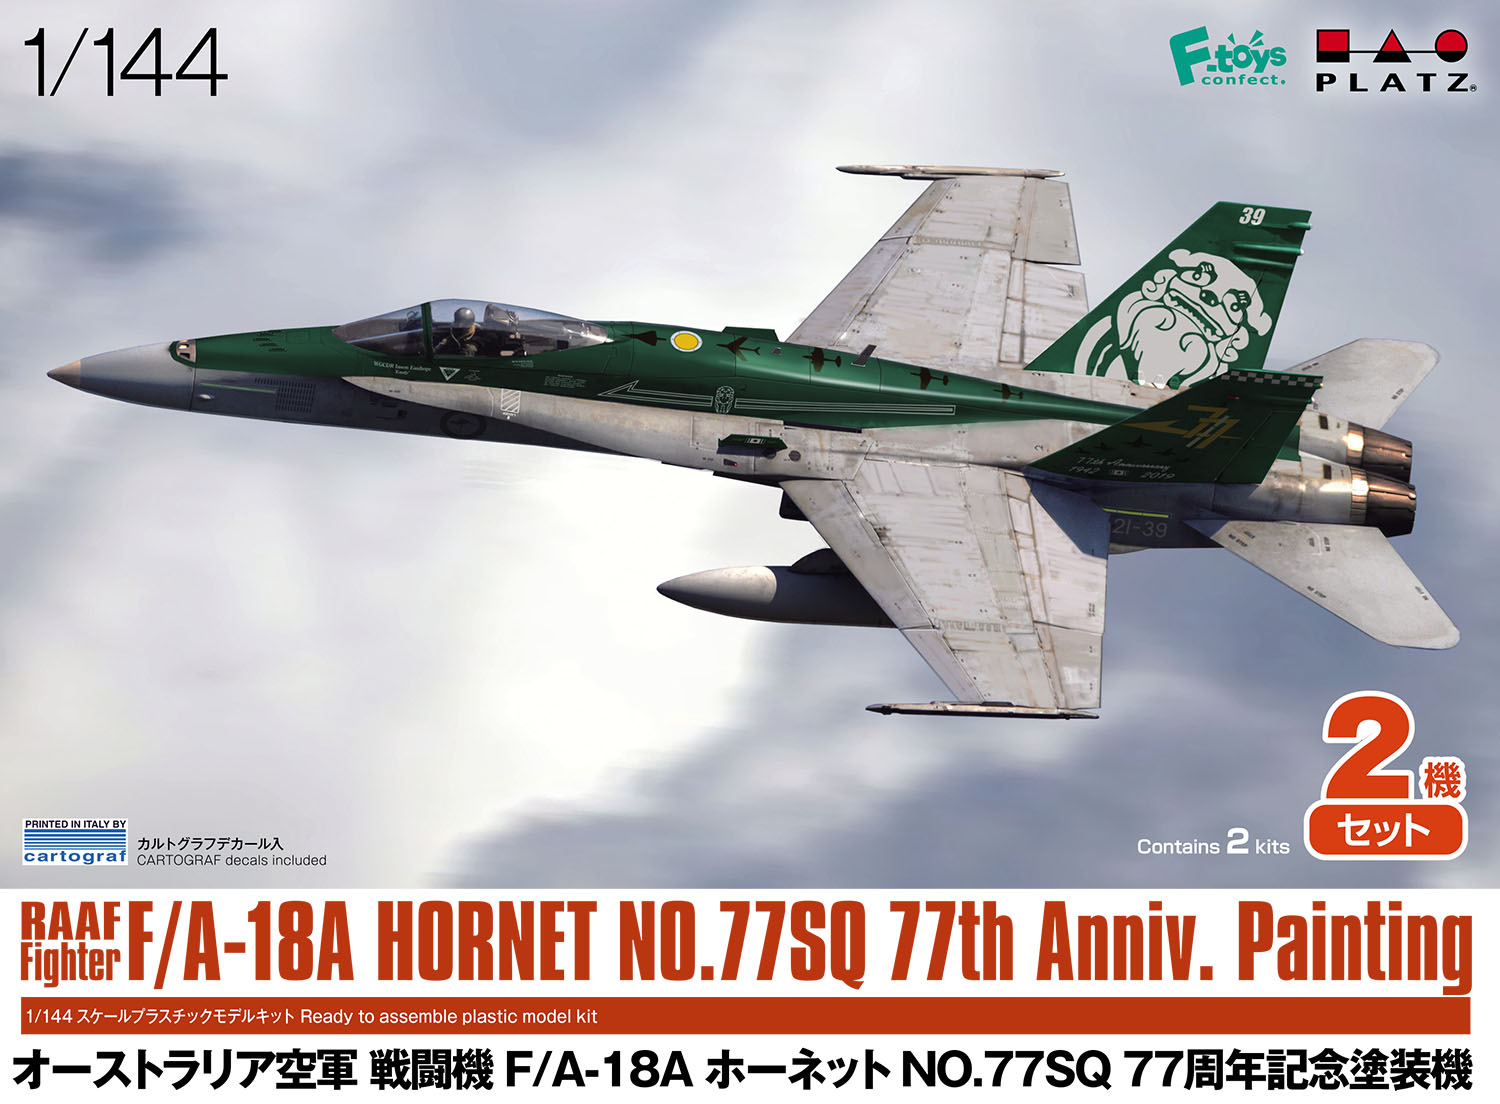 PLATZ 1/144 RAAF Fighter F/A-18A Hornet NO.77SQ 77th Anniv.